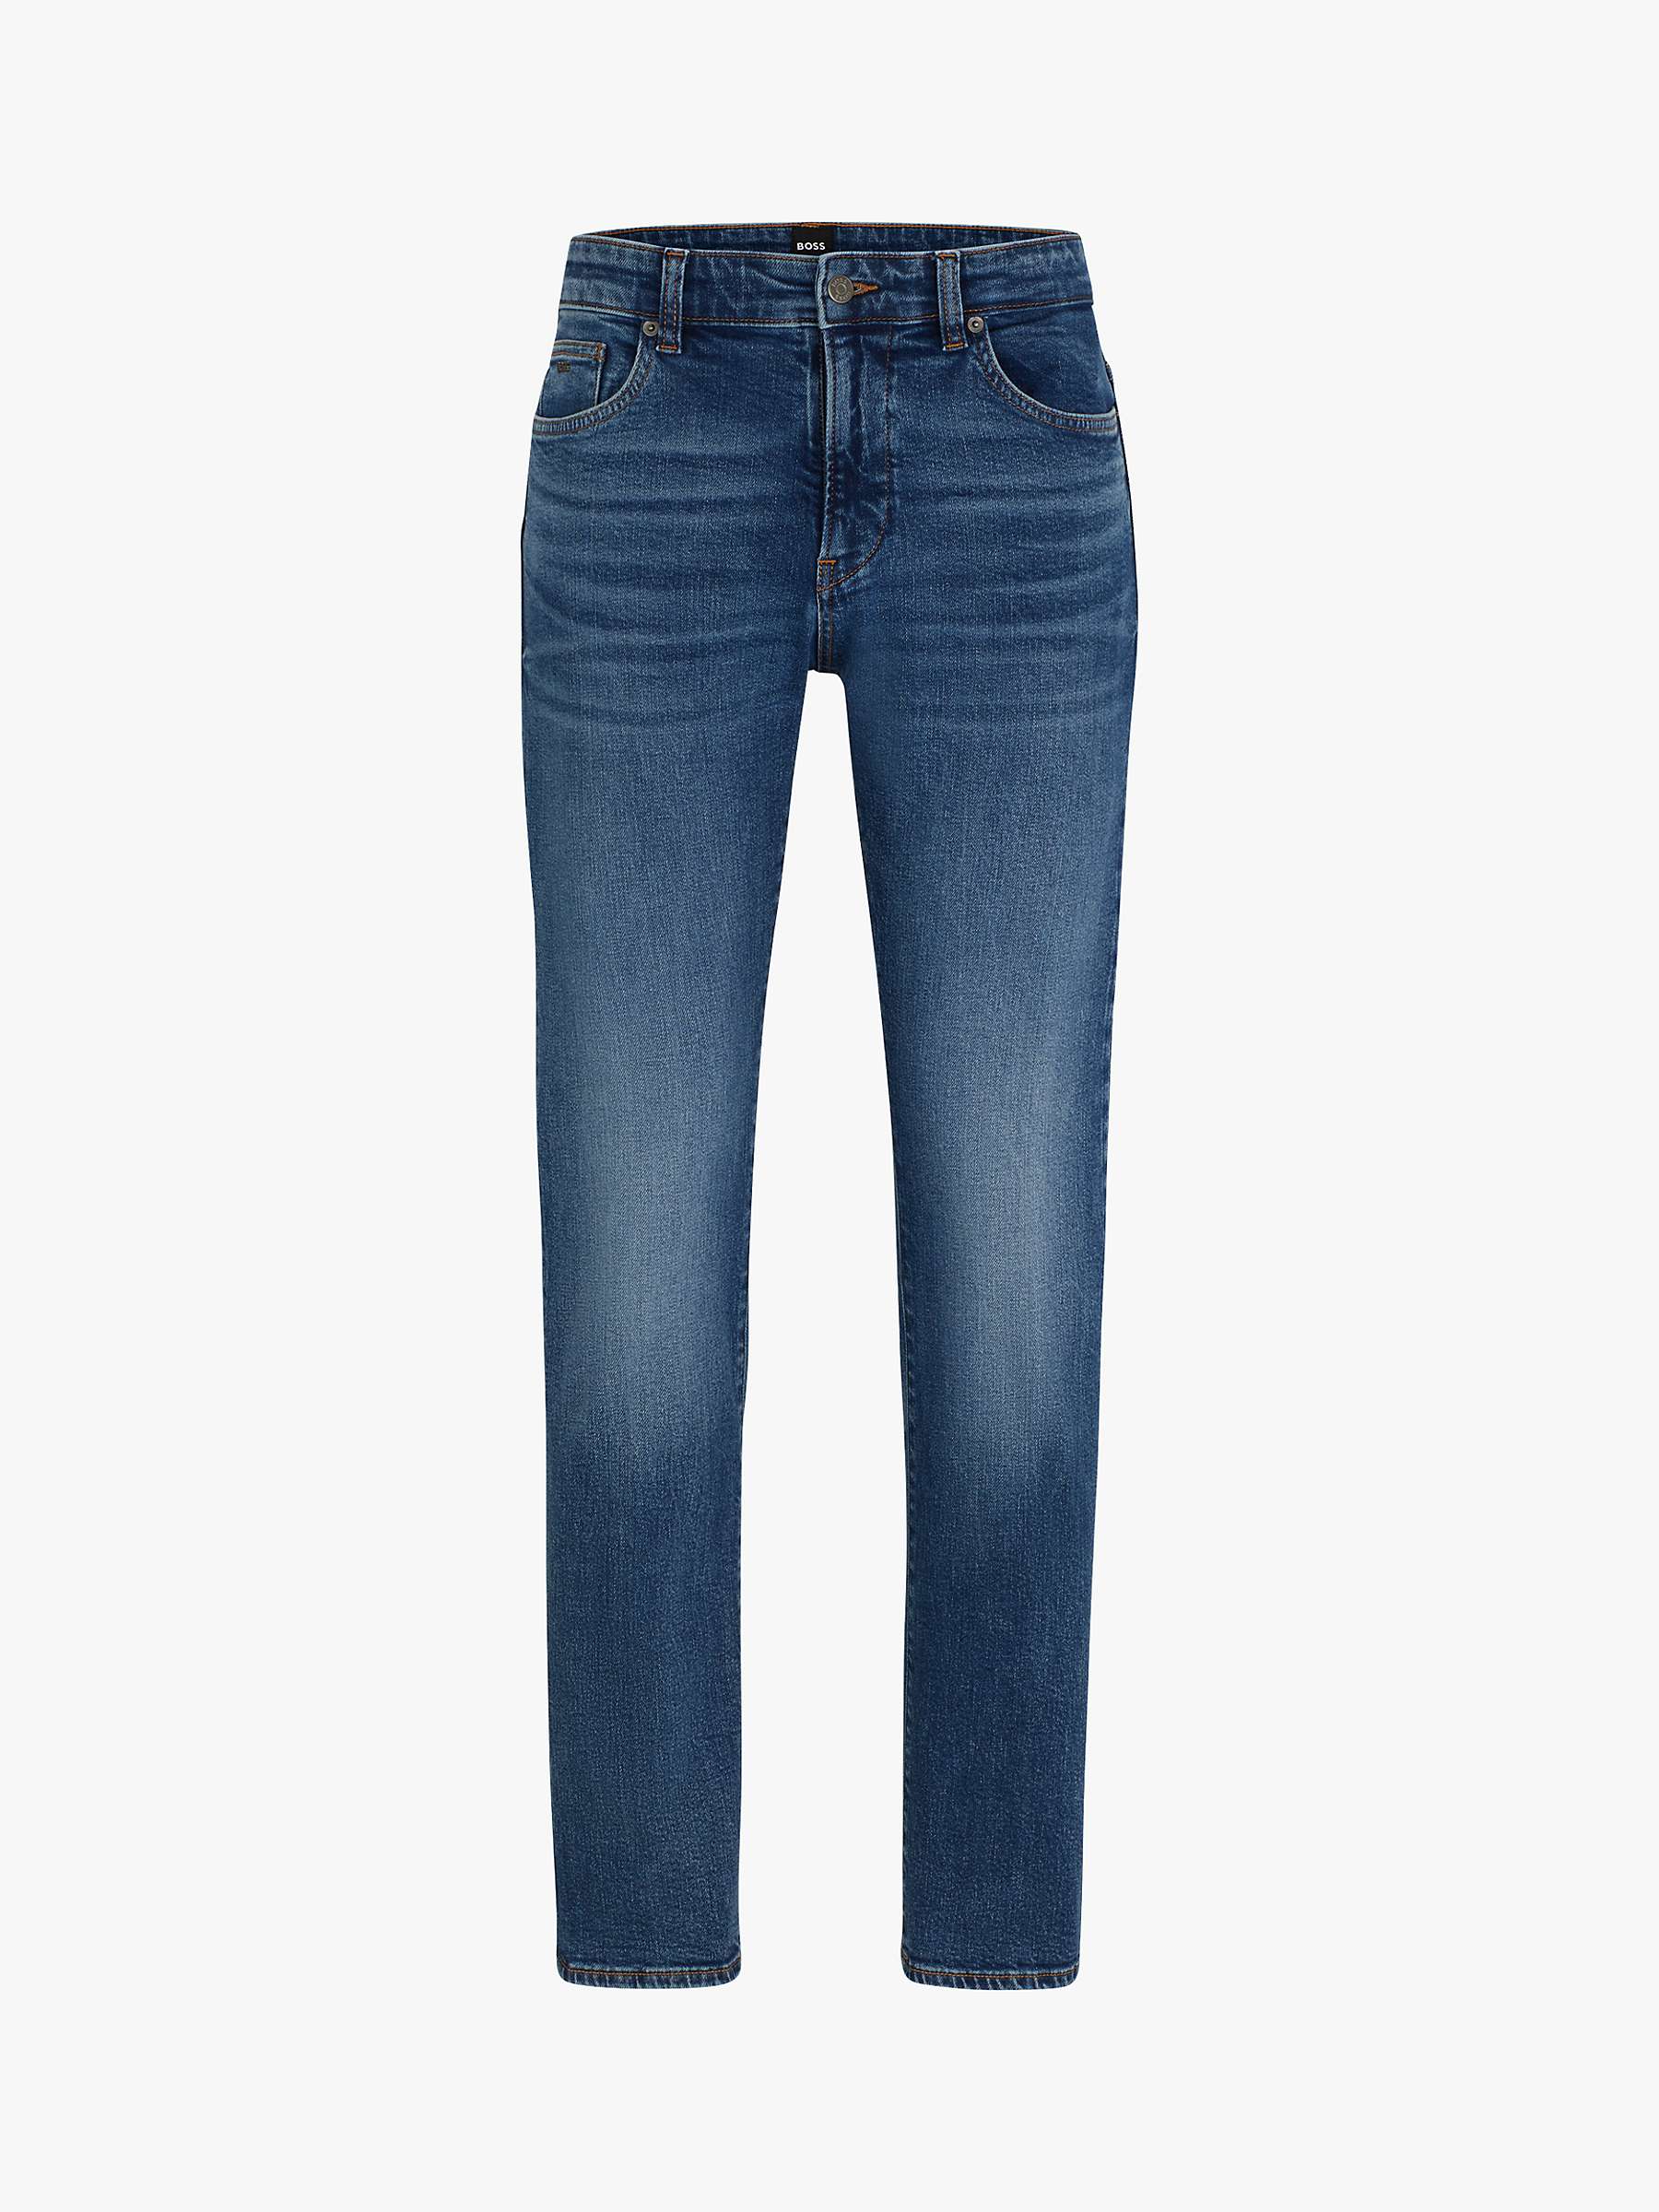 Buy BOSS Delware Slim Fit Jeans, Blue Online at johnlewis.com